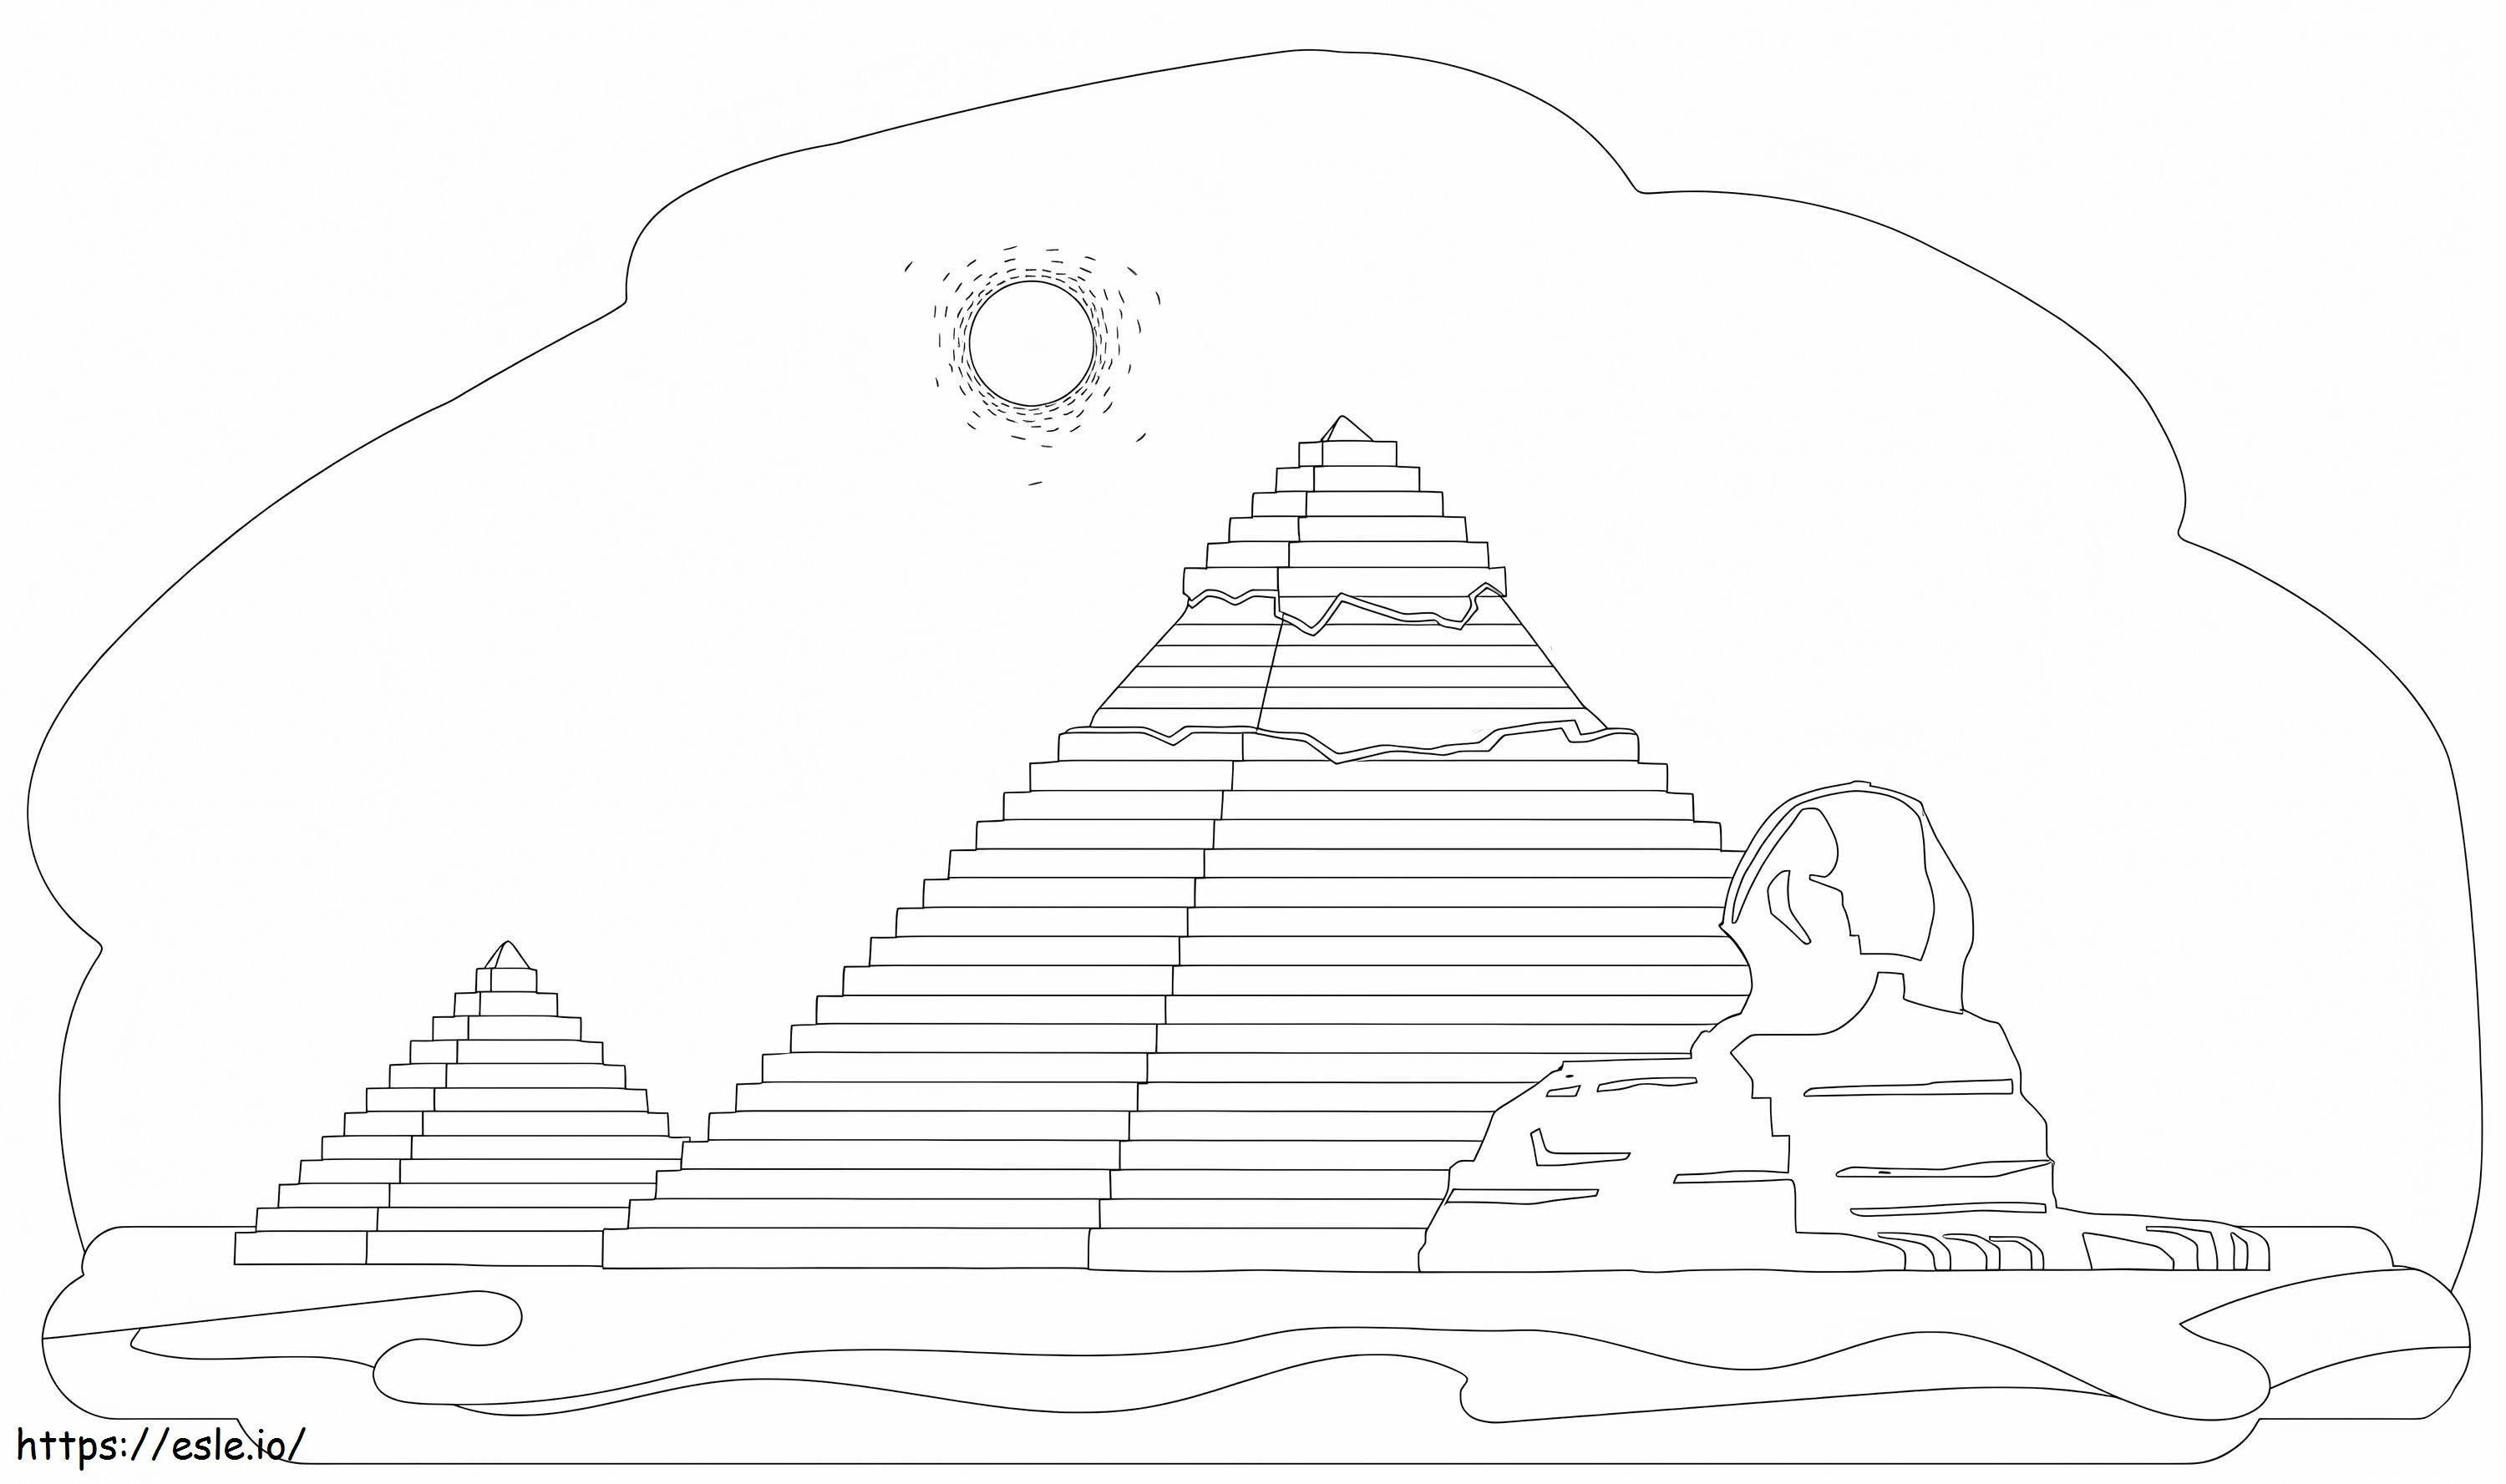 Great Pyramid Of Giza coloring page